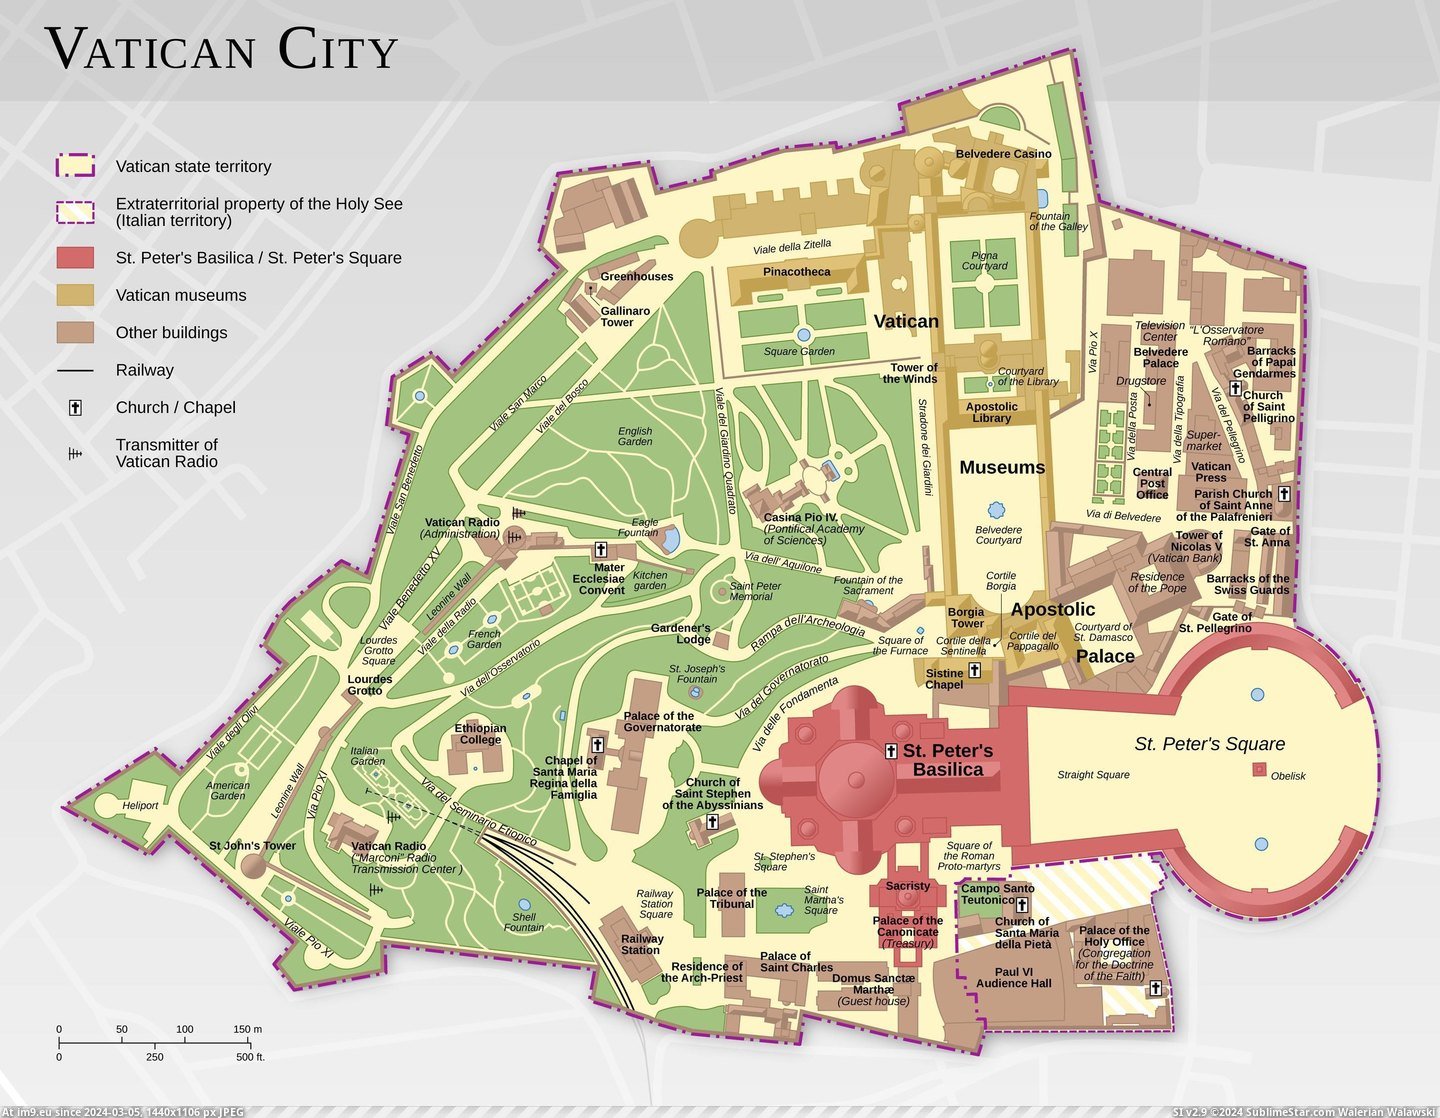 #Map #Vatican #City [Mapporn] Map of Vatican City [2,888×2,230] Pic. (Bild von album My r/MAPS favs))